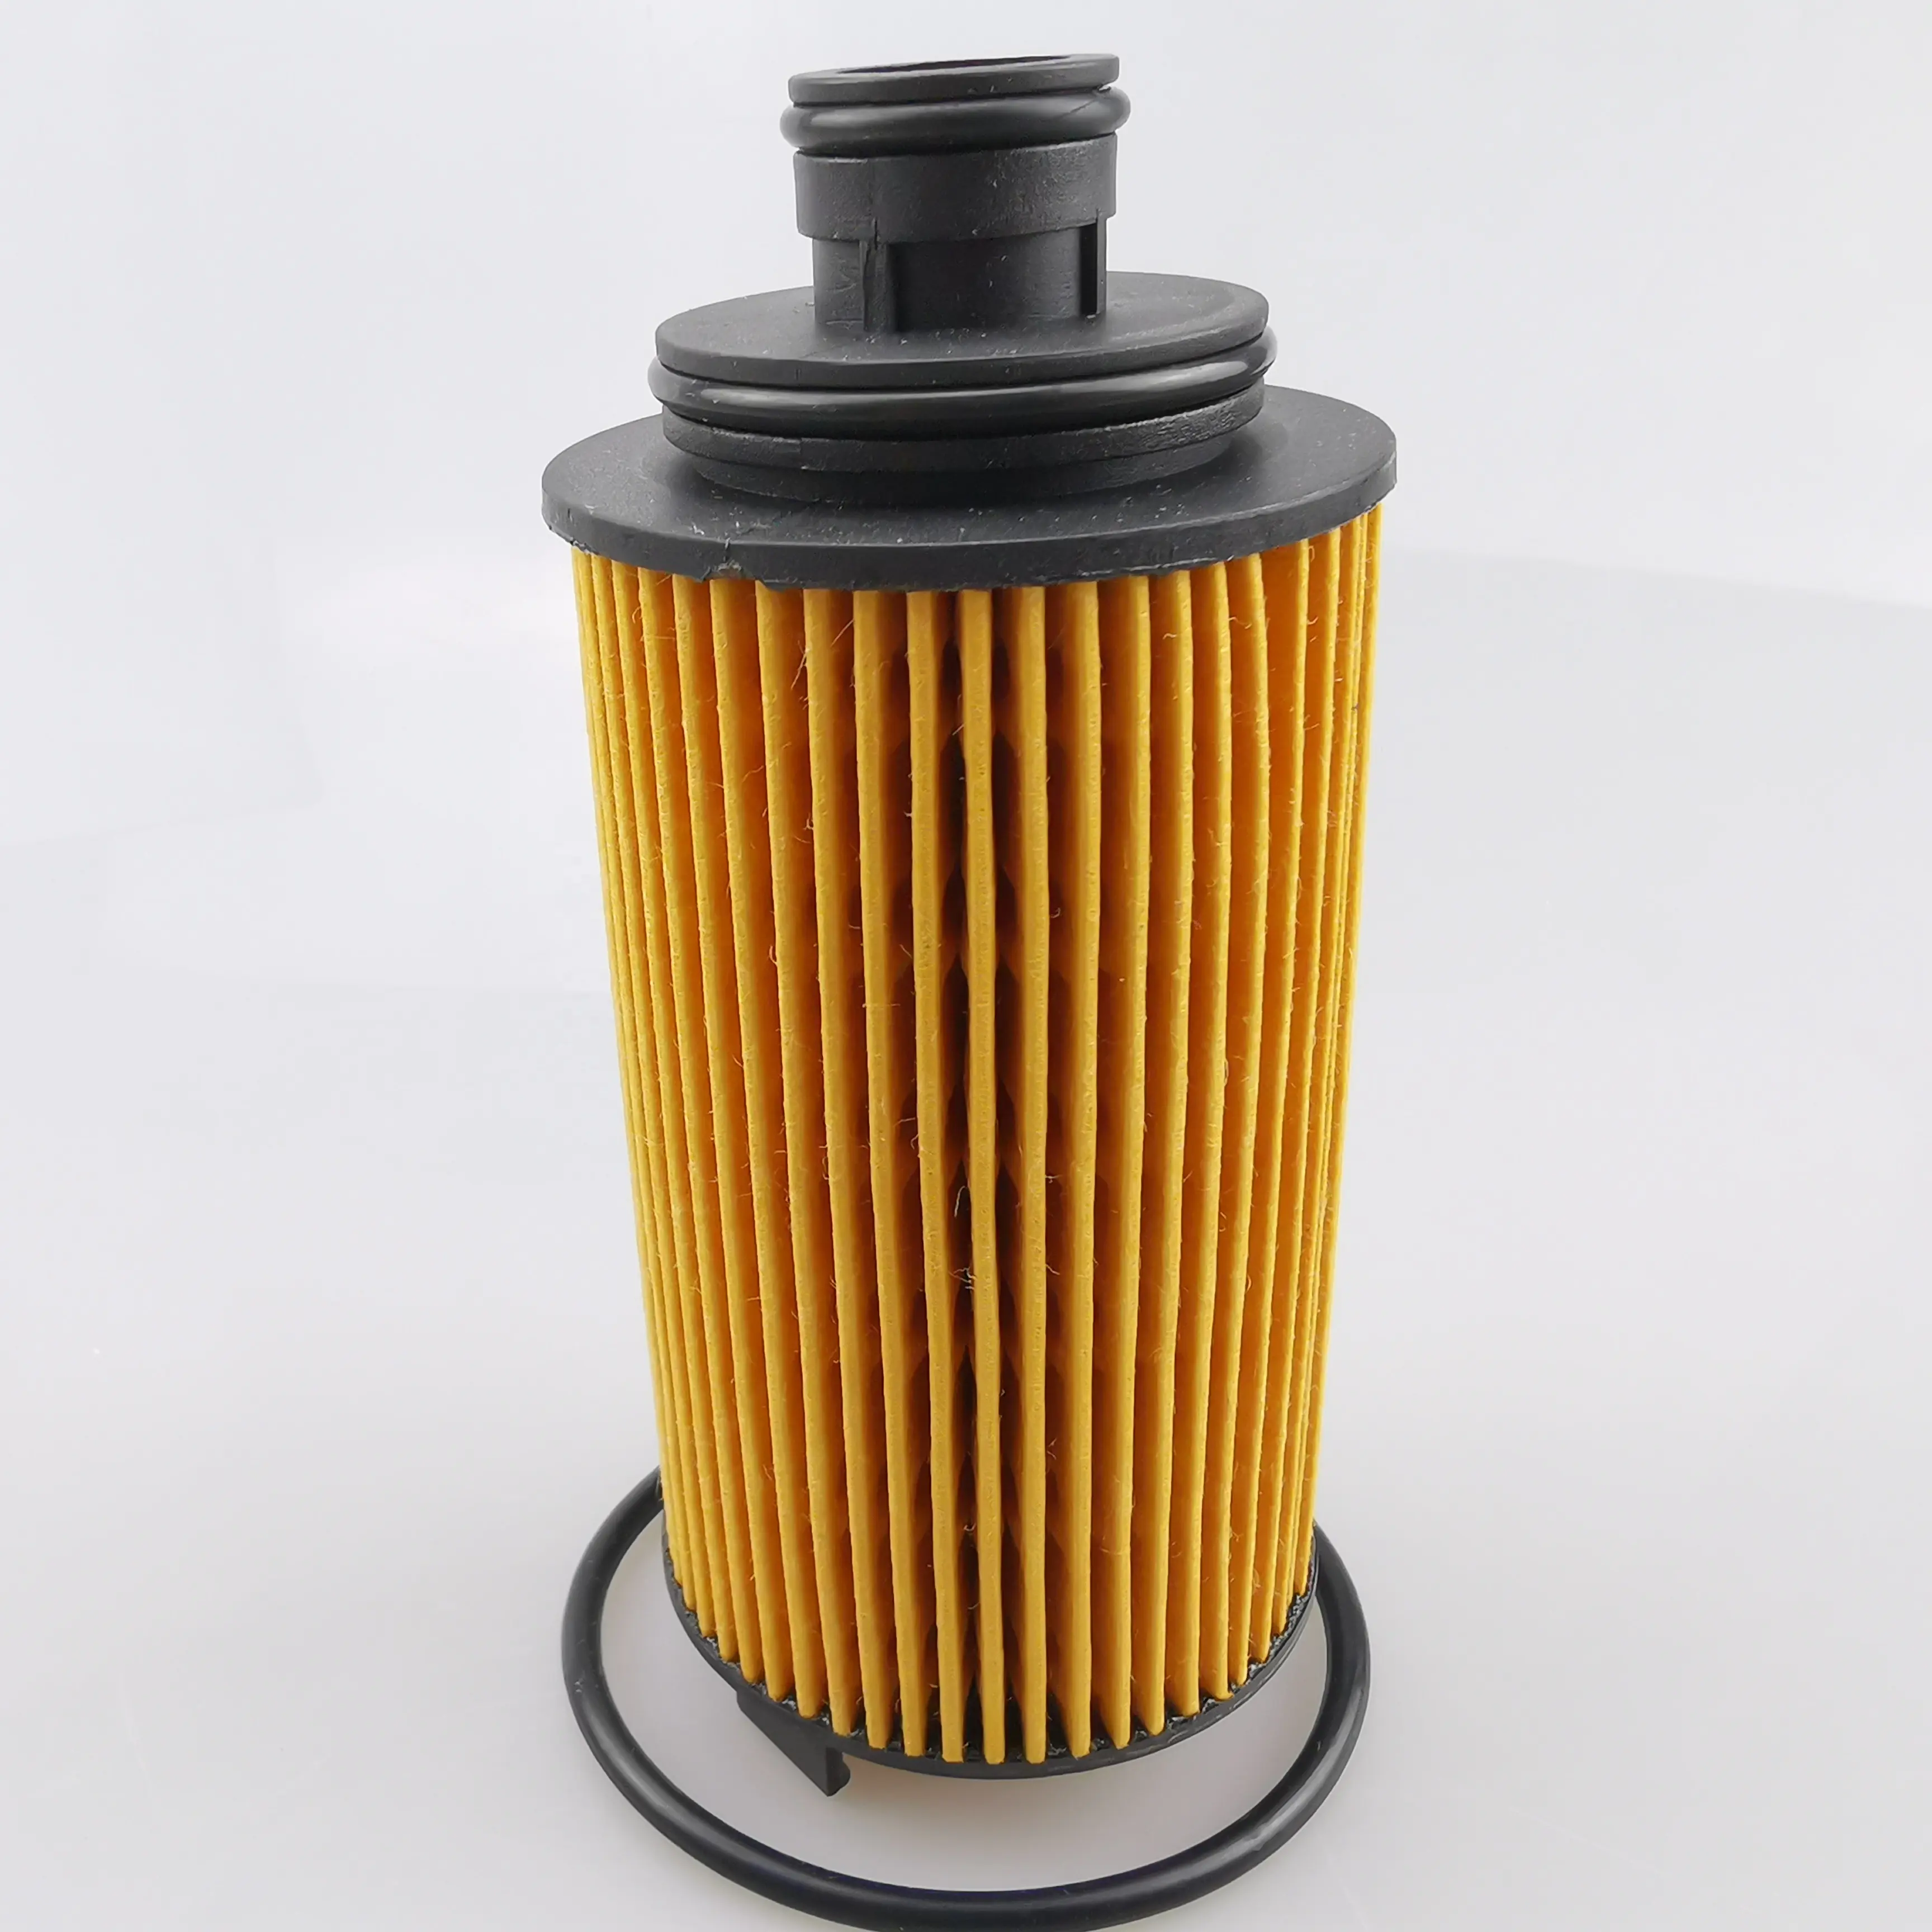 SAIC MAXUS G10 2.0T Brand Oil filter 10105963